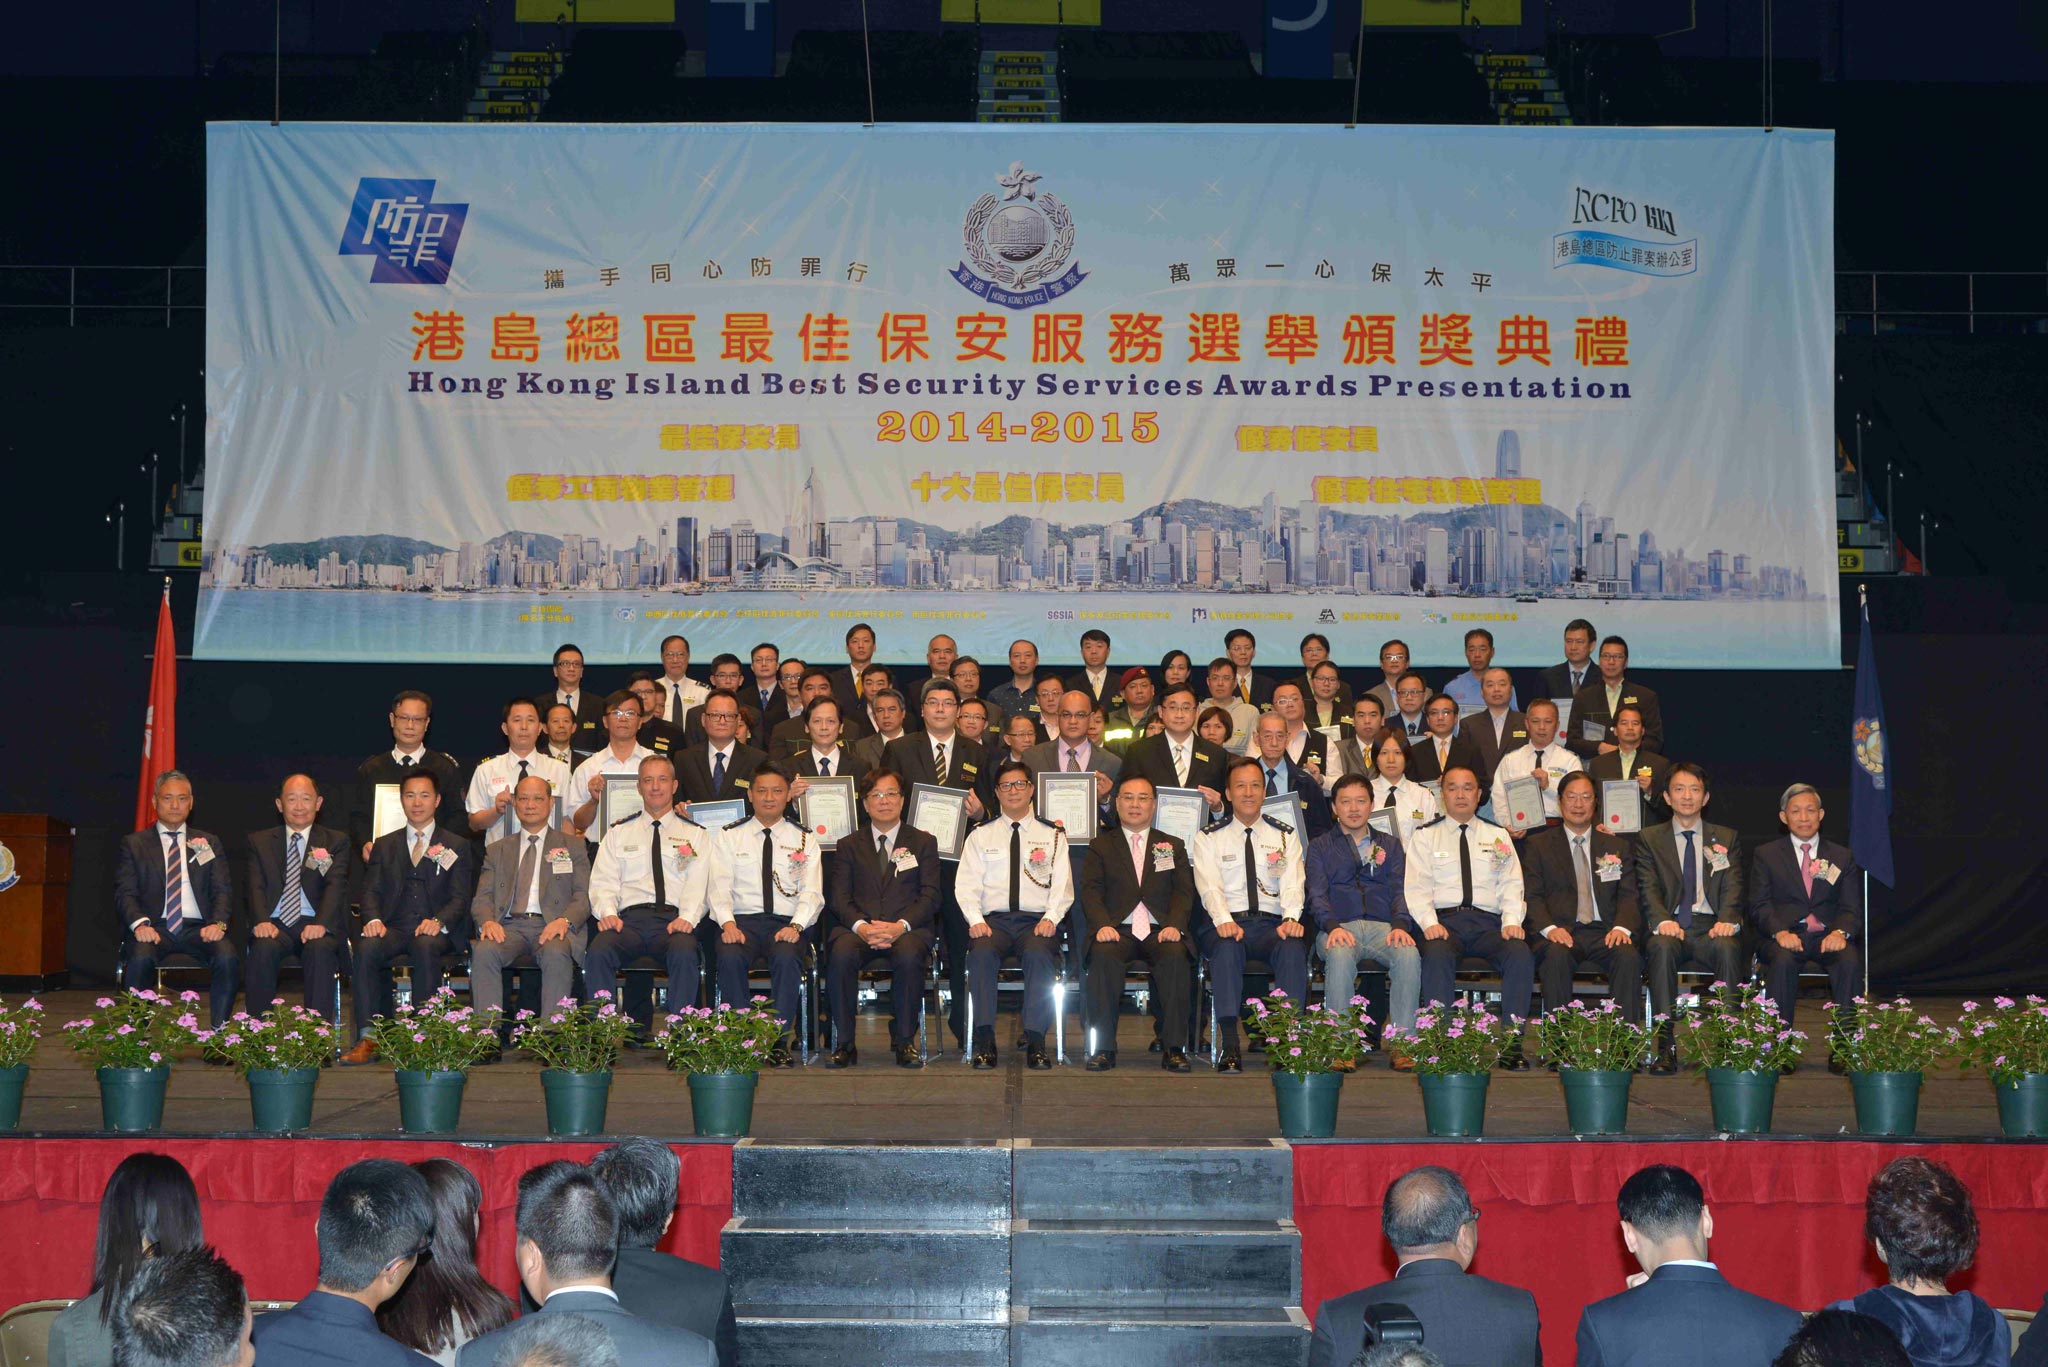 Hong Kong Island Region Best Security Services Awards 2014-2015